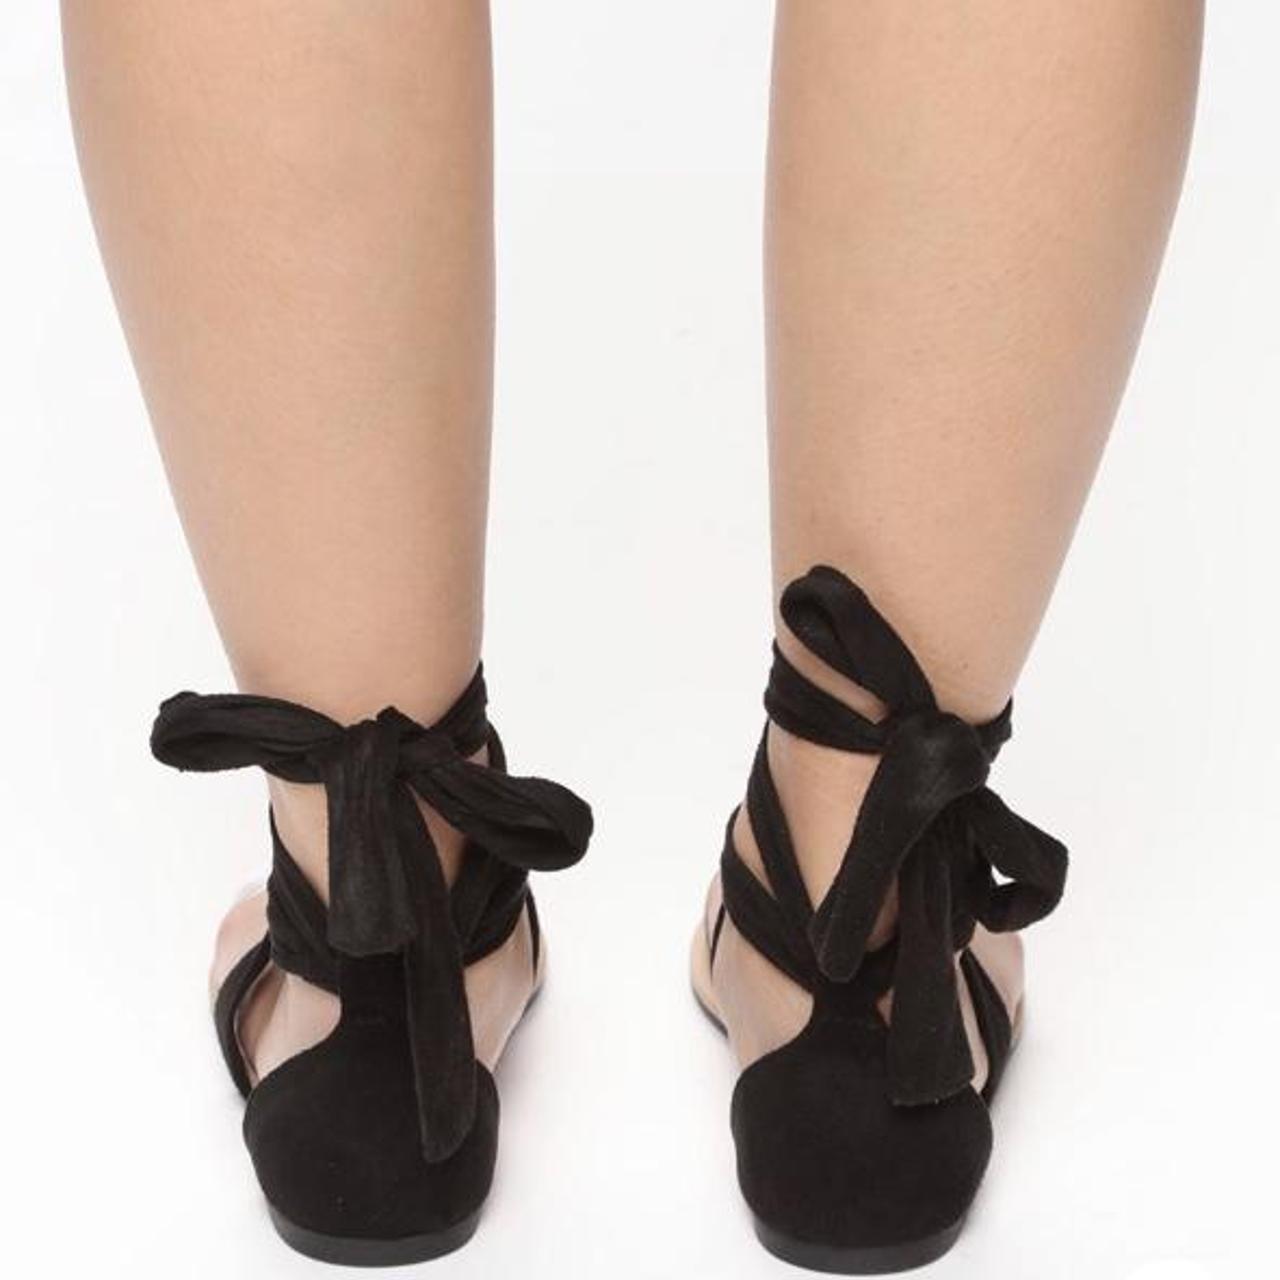 Fashion Nova Flat Sandals - Black. Size 8. Never... - Depop